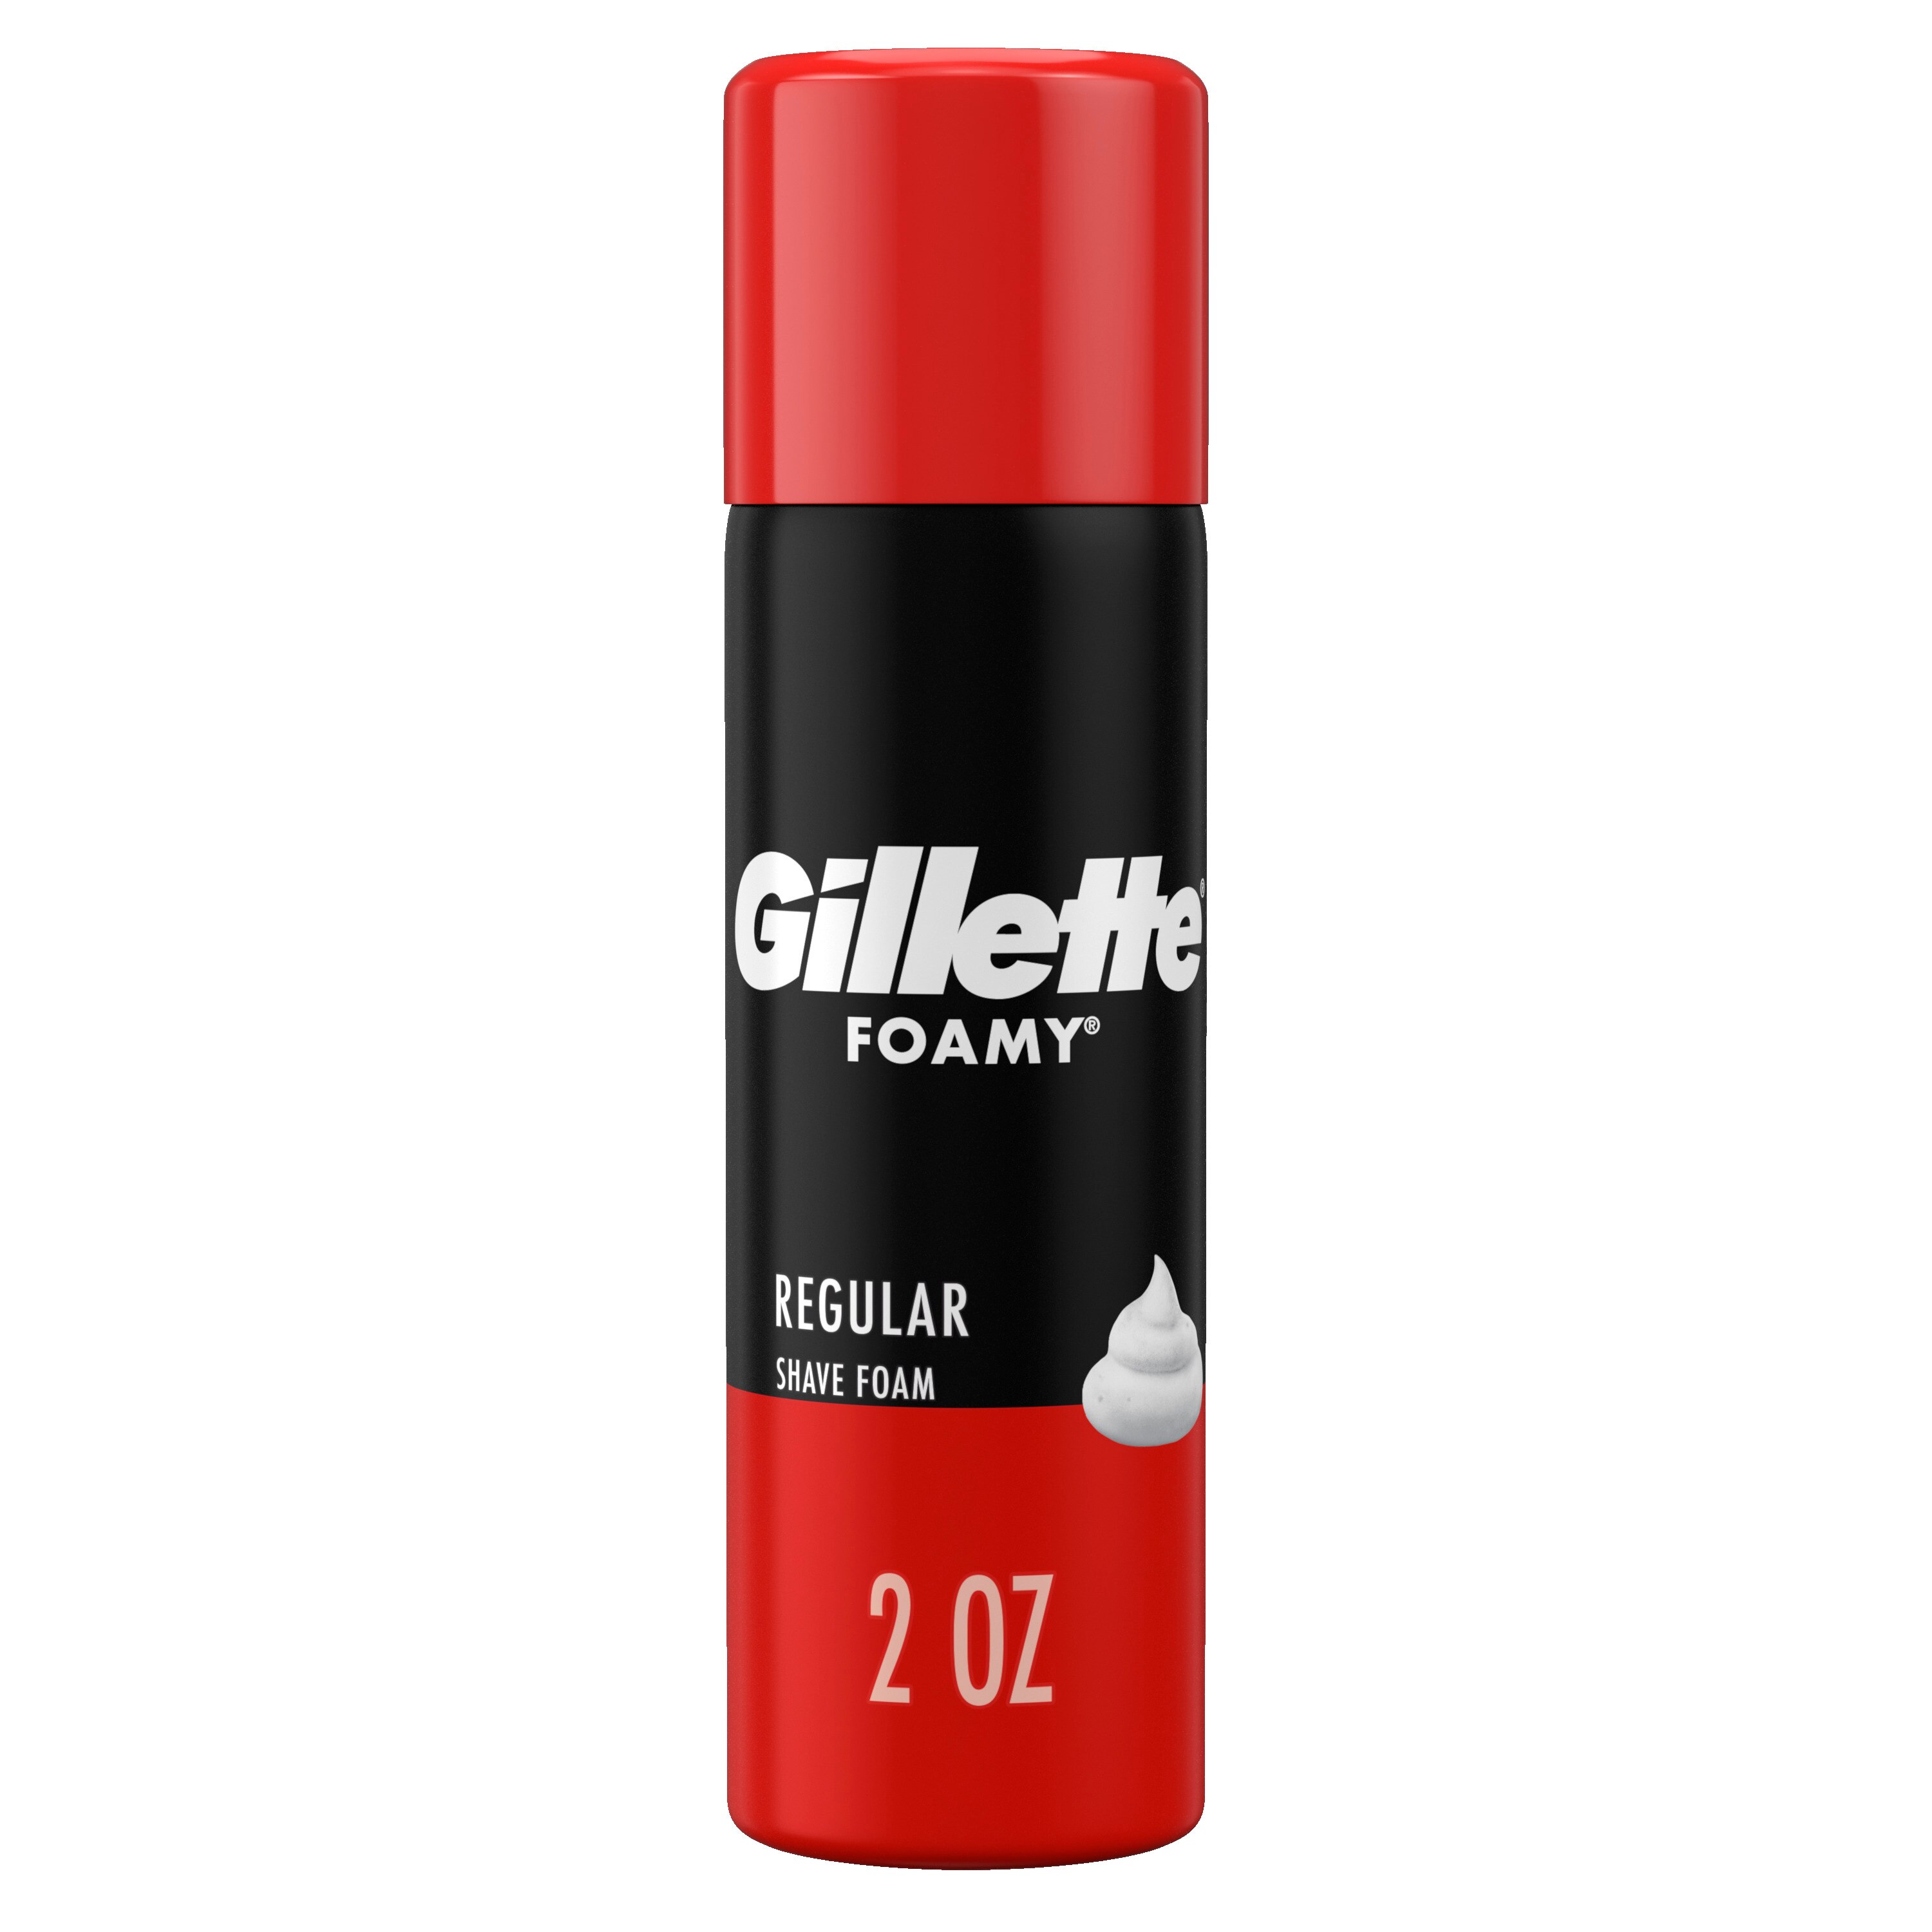 Gillette Foamy Regular - Espuma de afeitar, 2 oz